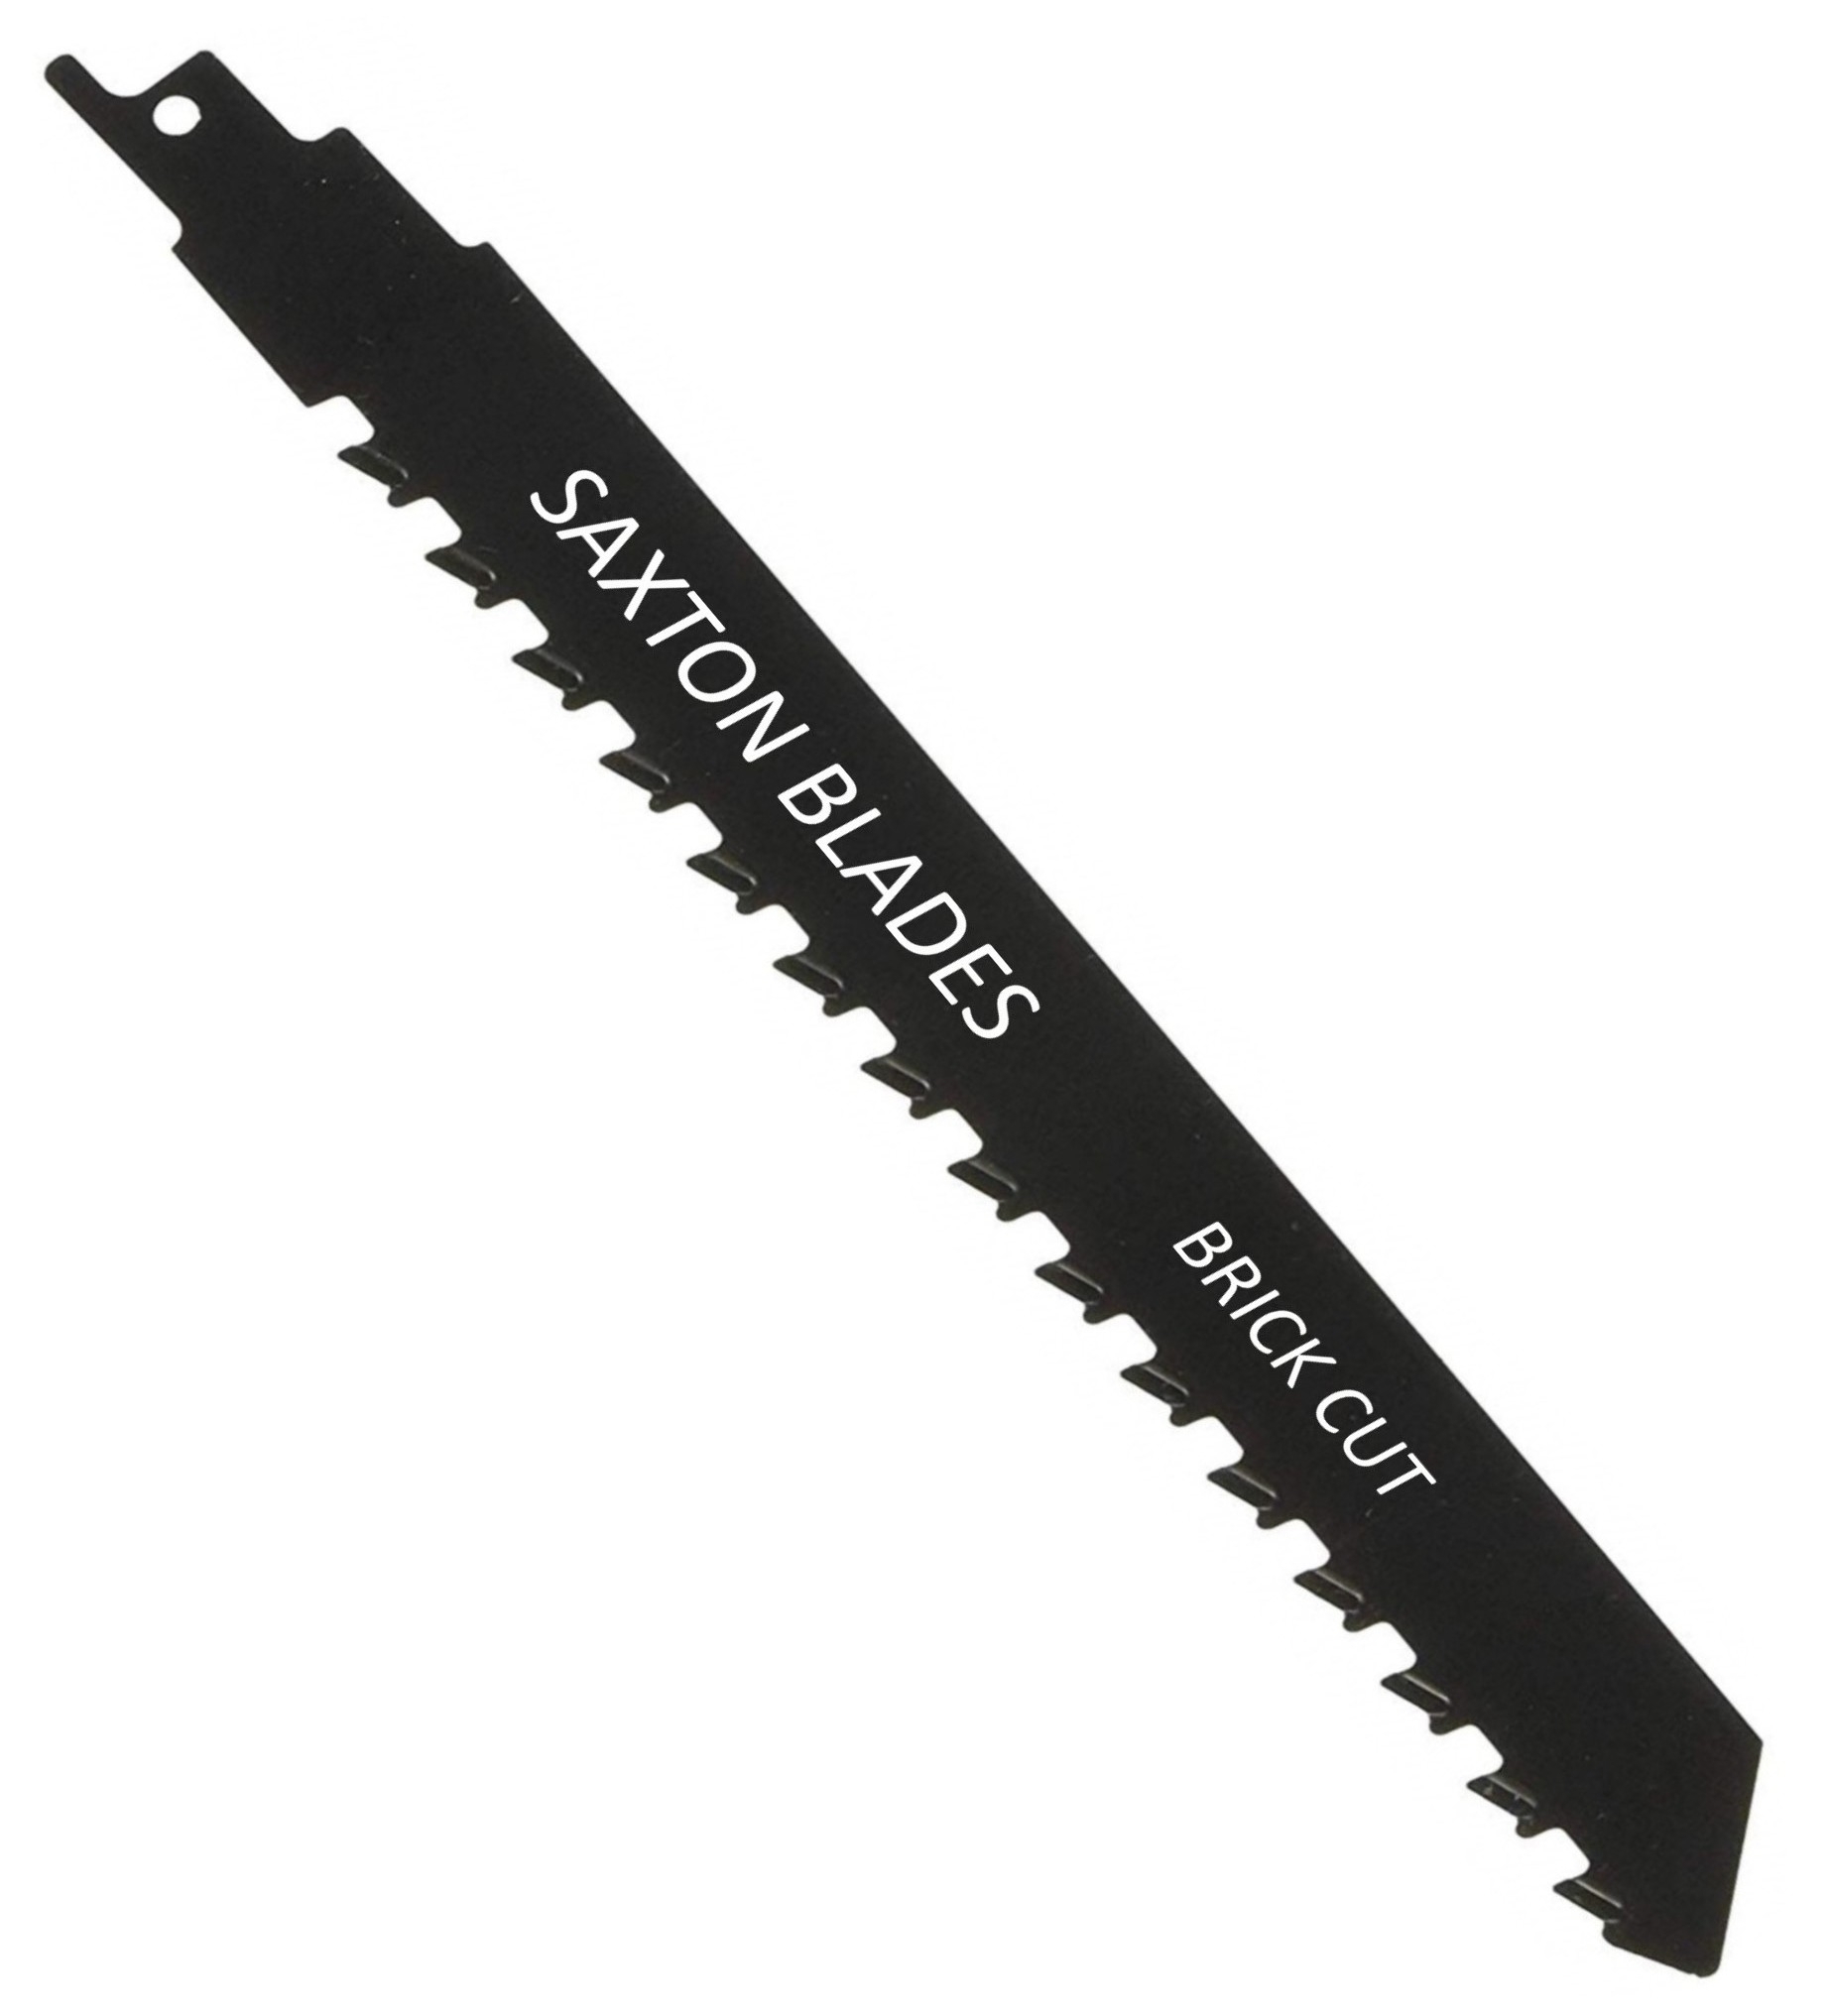 R228BC Brick Cutting Blade